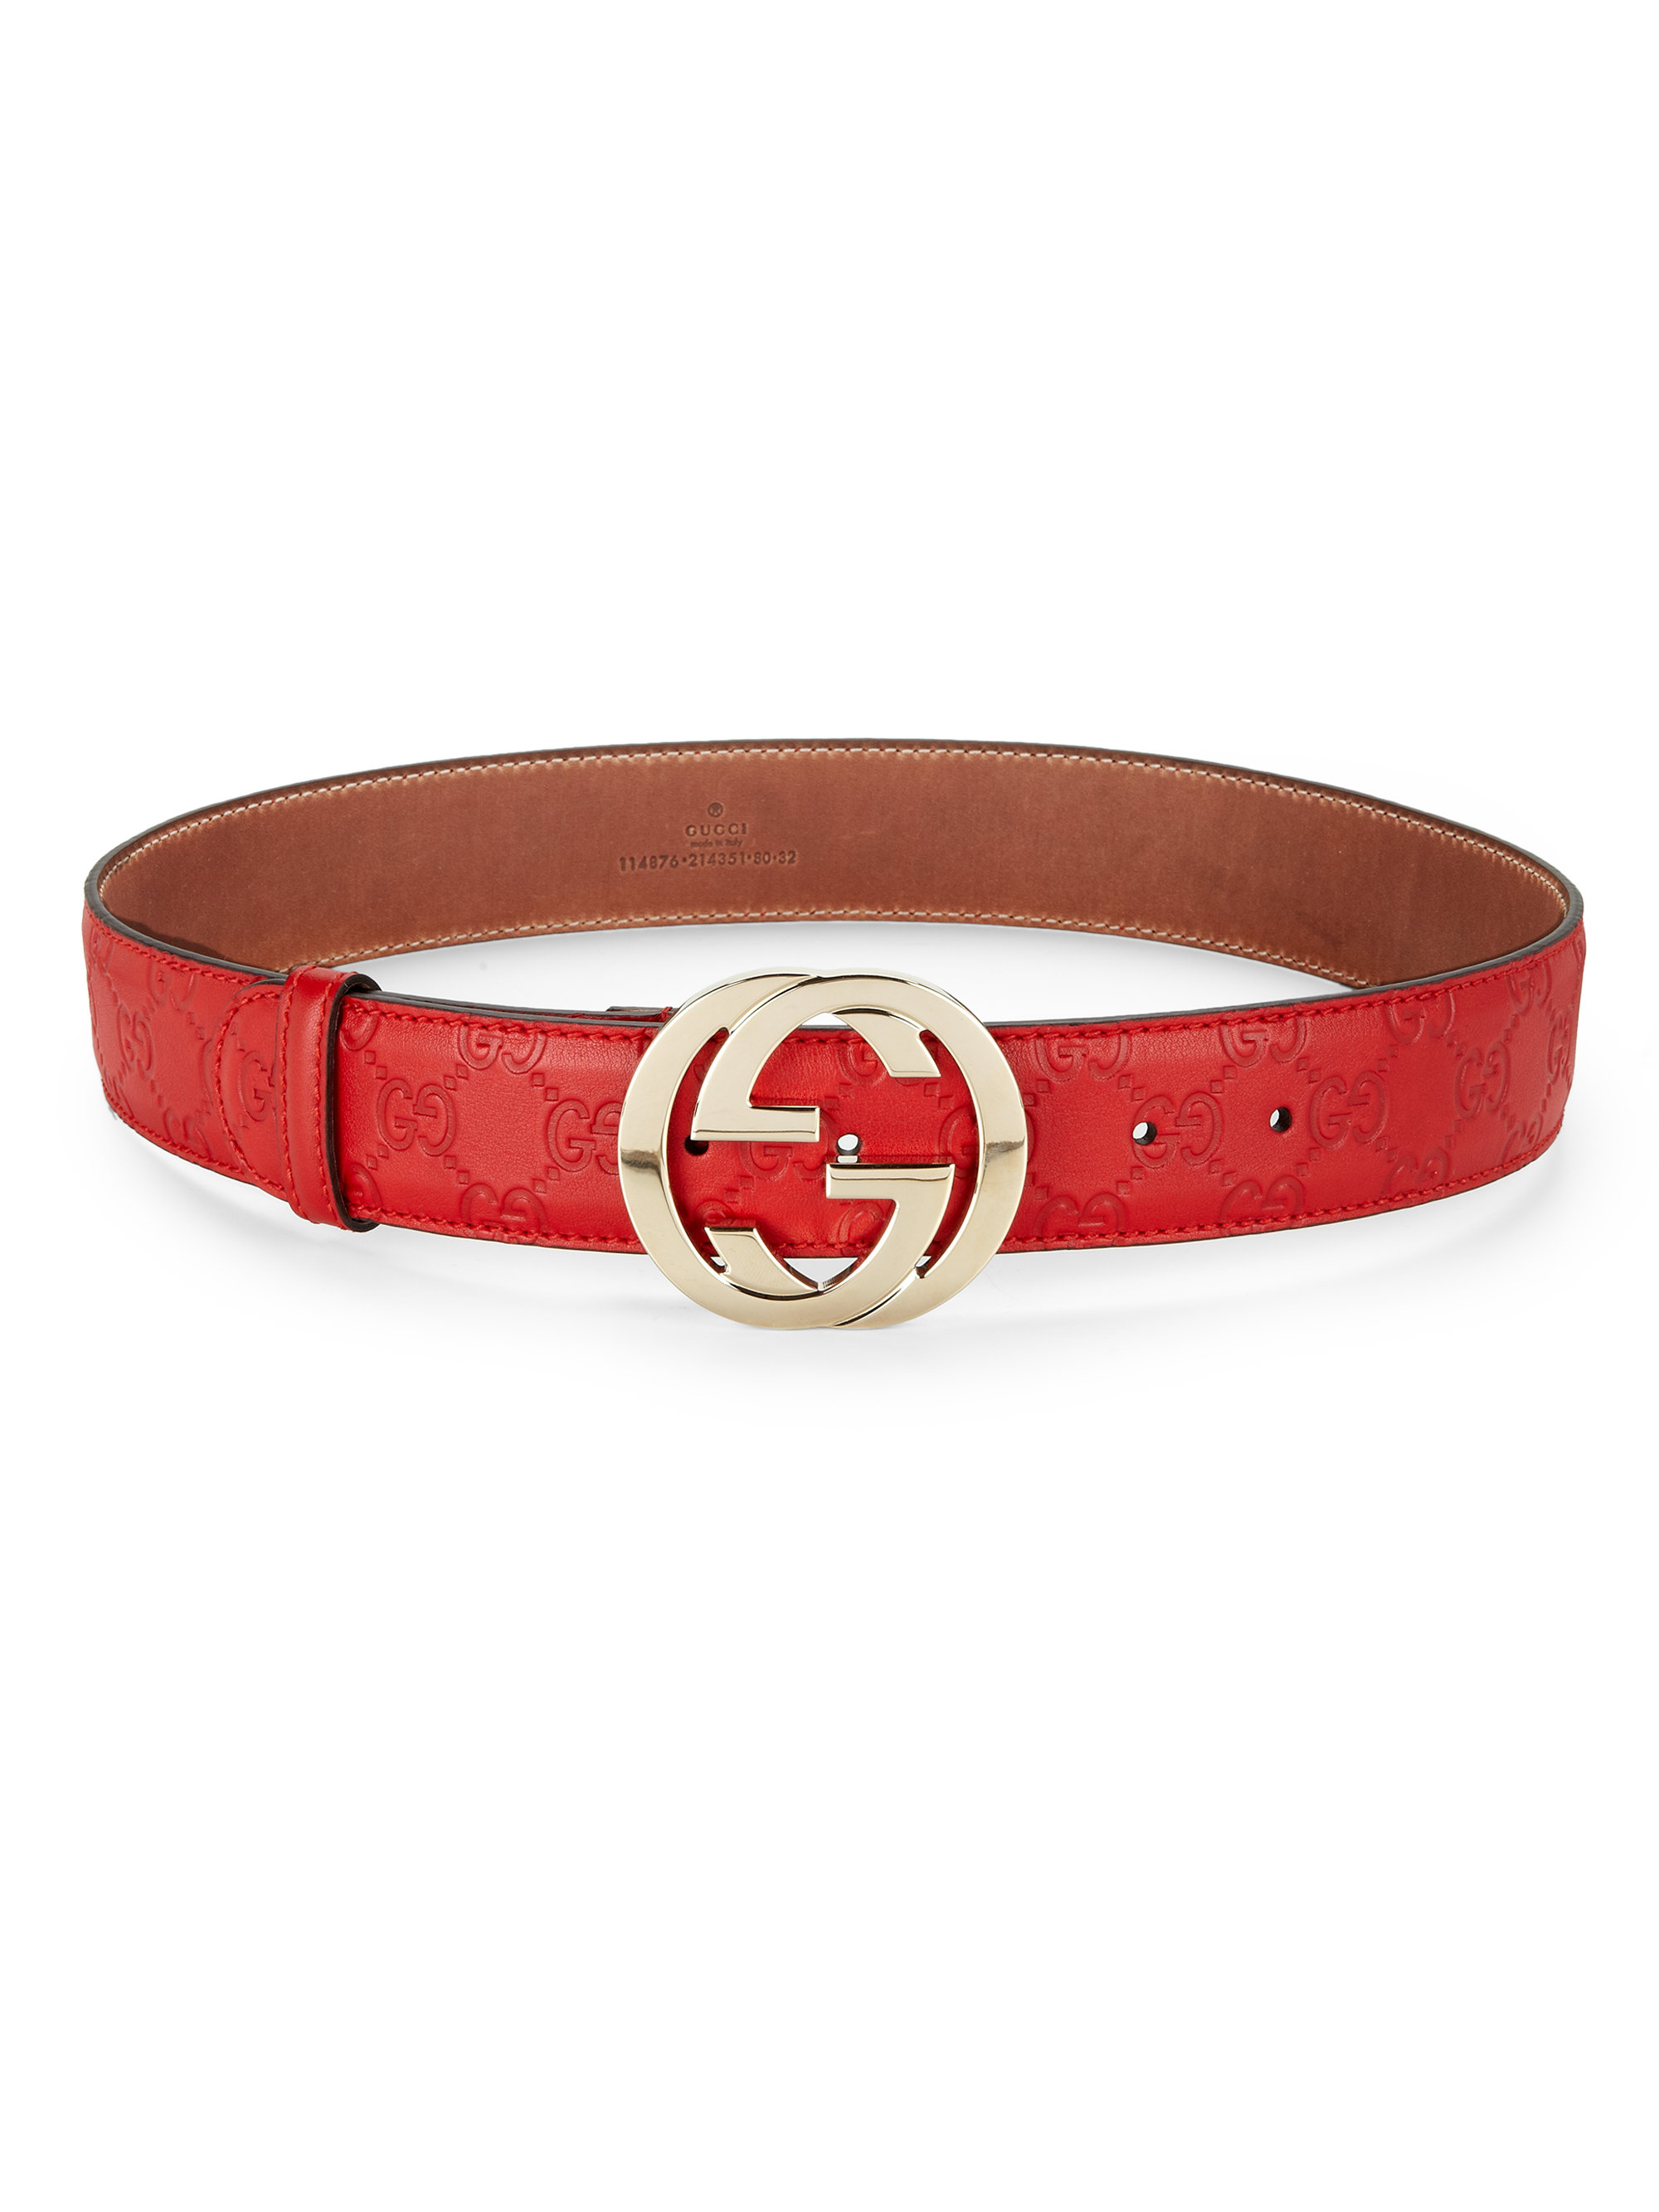 Lyst - Gucci Interlocking G Buckle Leather Belt in Red